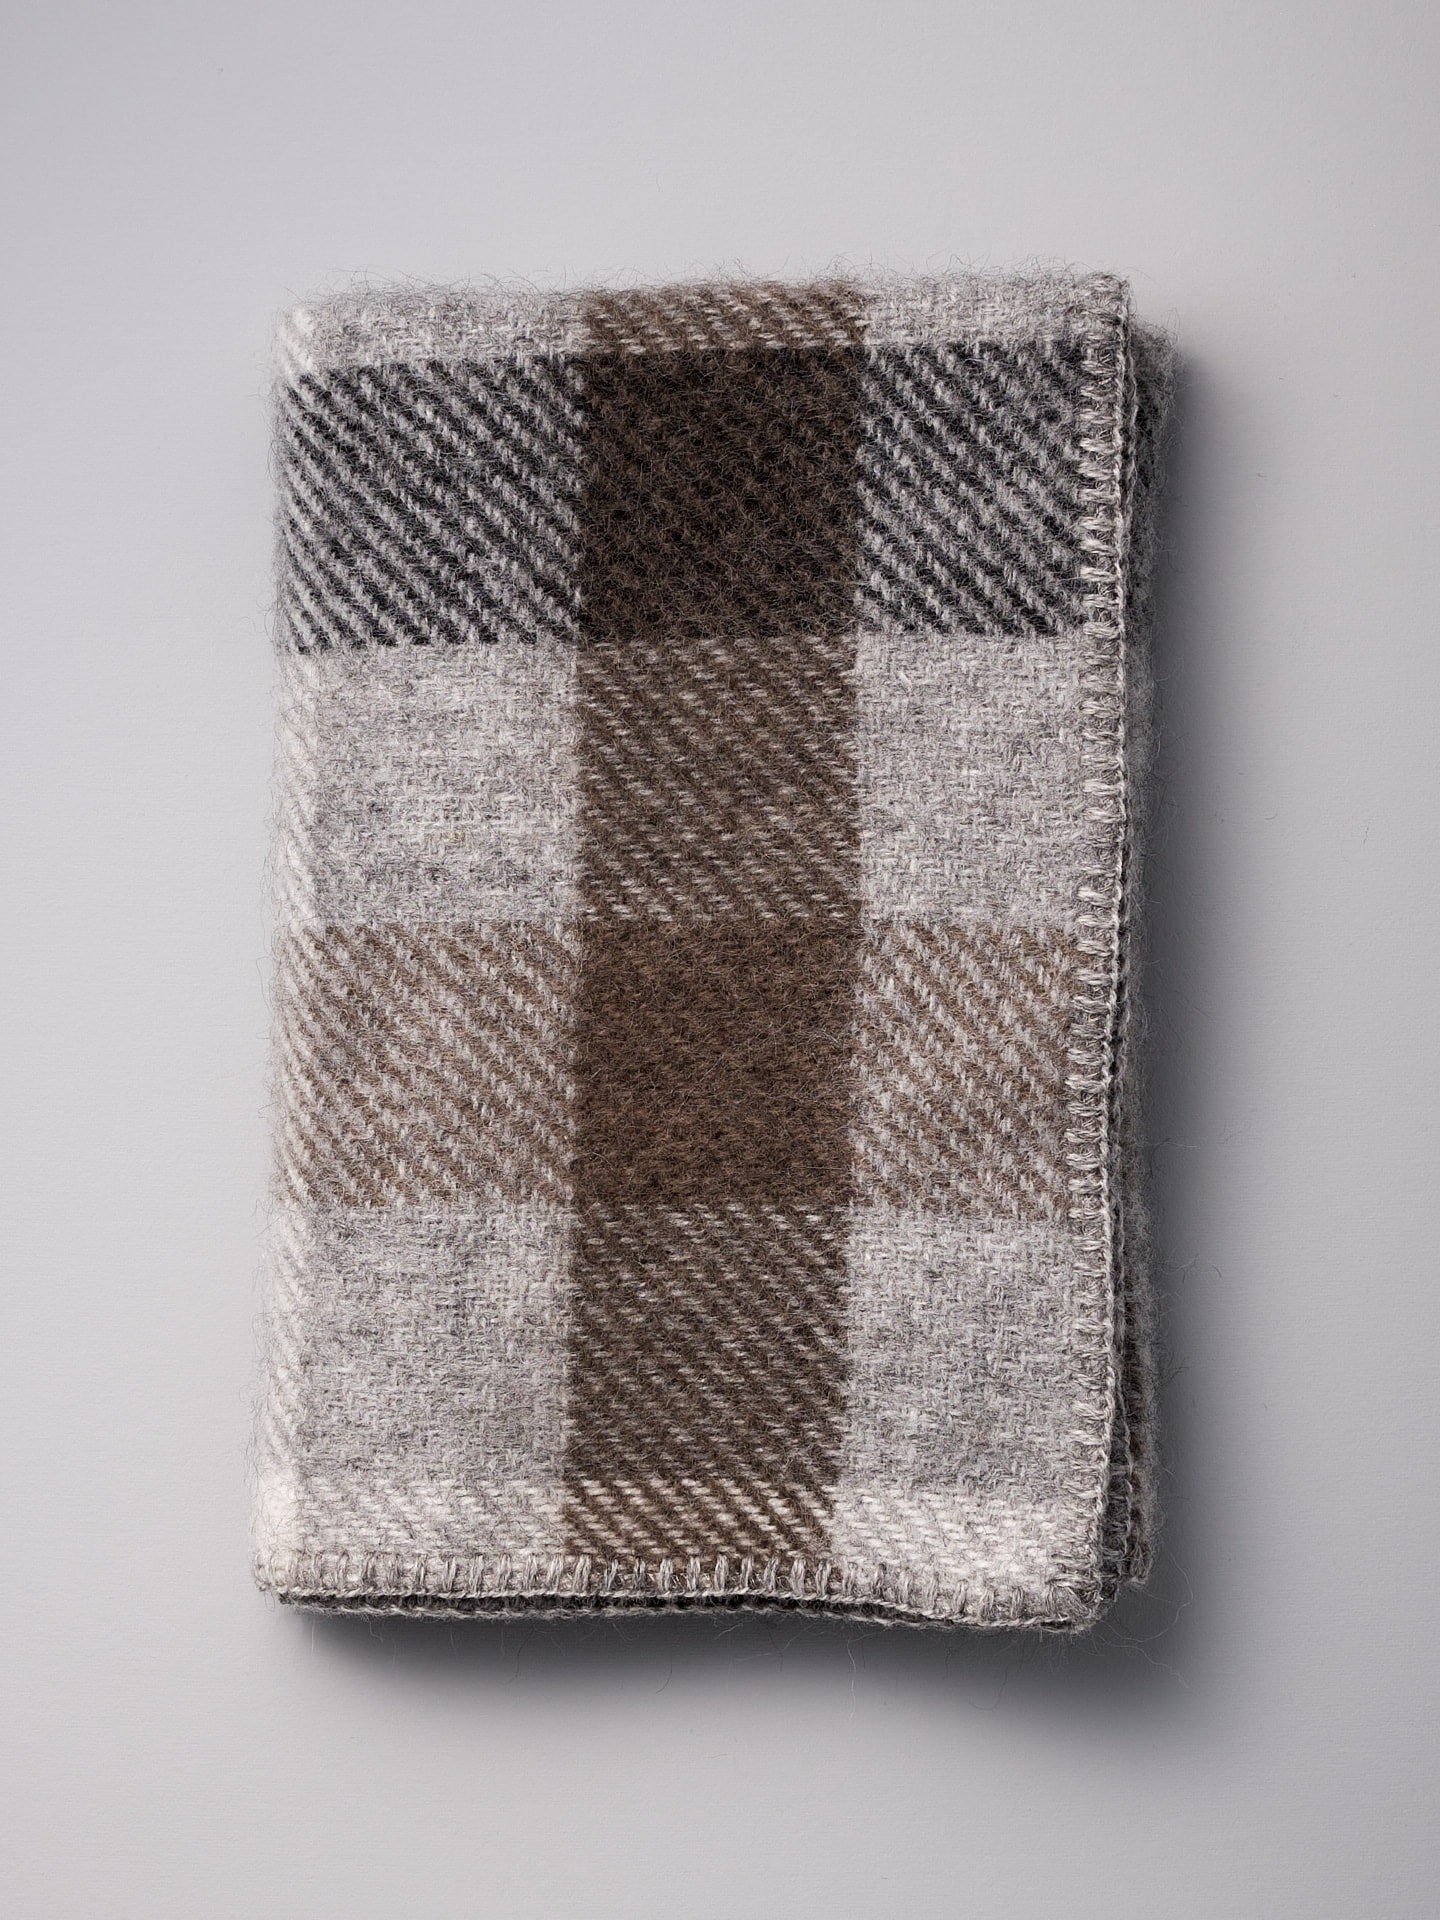 A Klippan Gotland Wool Baby Throw – Multi Grey blanket on a white surface.